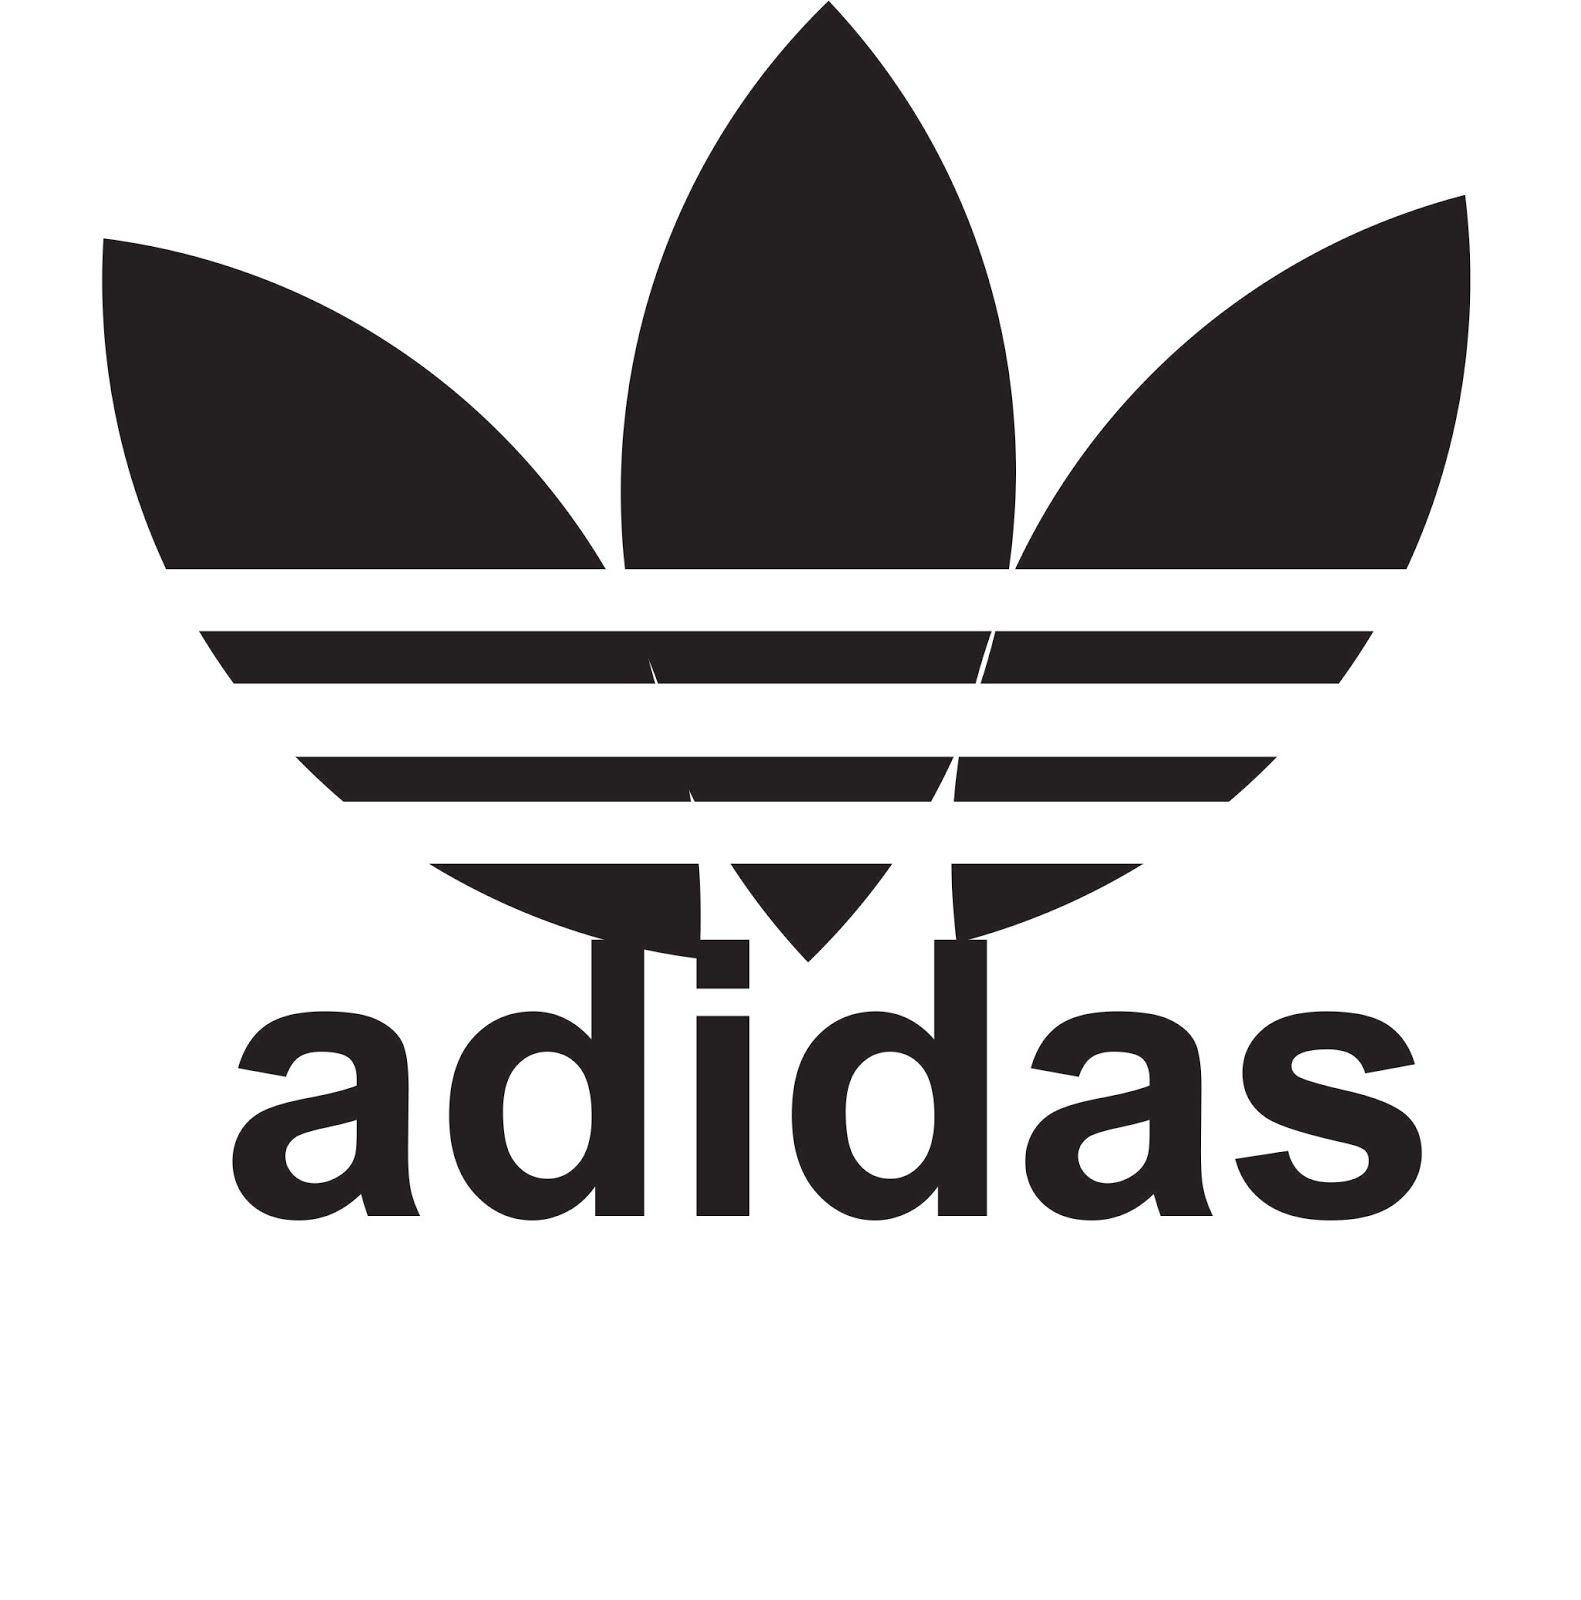 White Addidas Logo - Free Adidas Logo Cliparts, Download Free Clip Art, Free Clip Art on ...